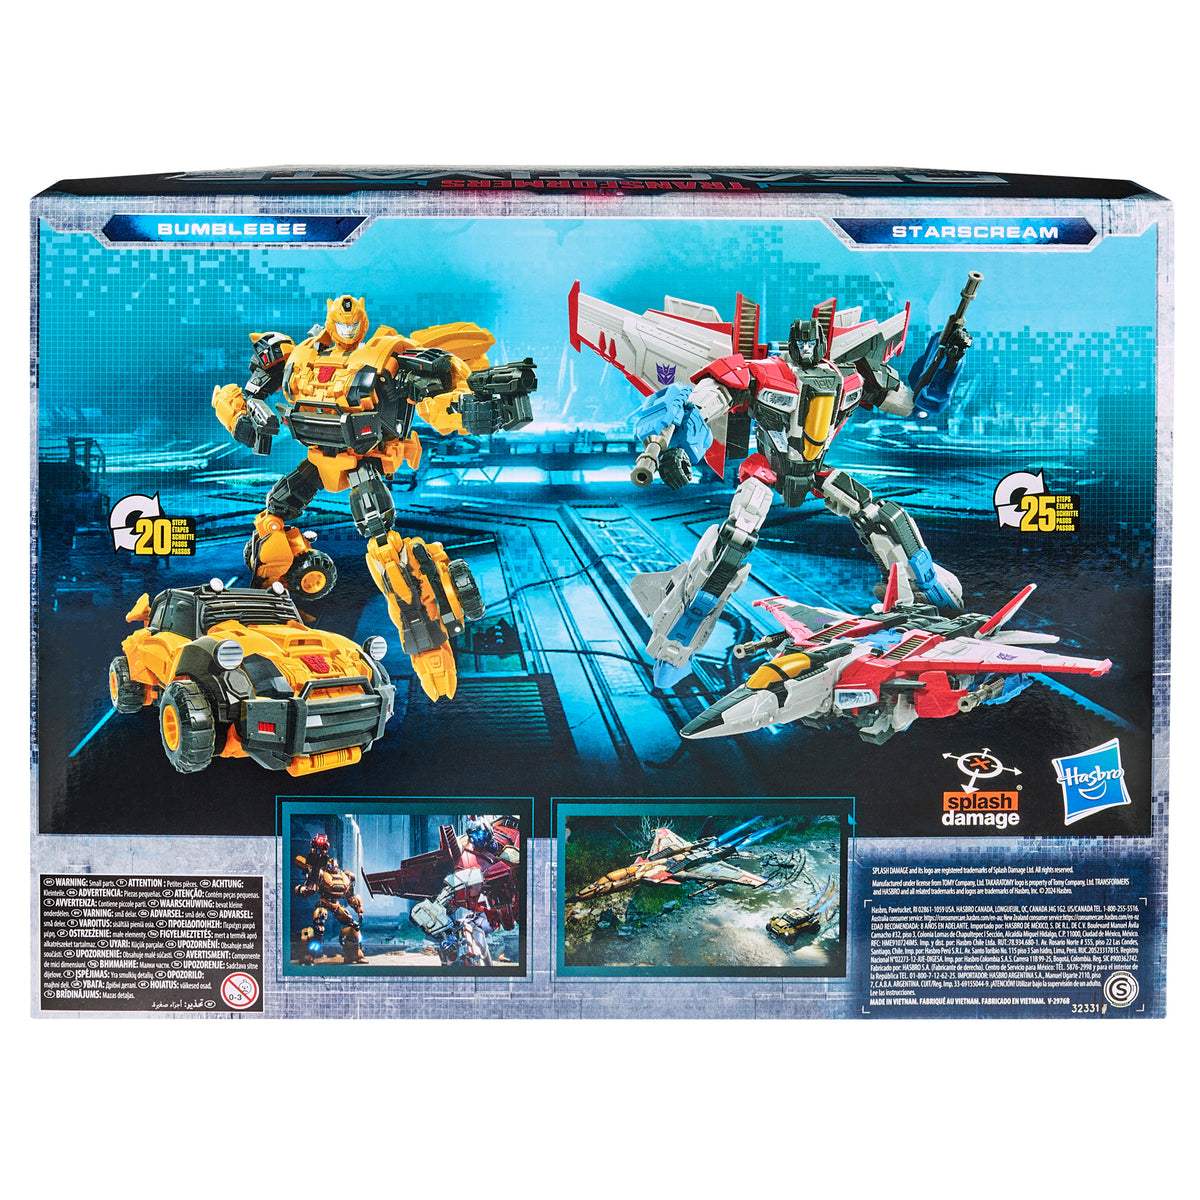 Transformers EarthSpark Deluxe Bumblebee – Hasbro Pulse